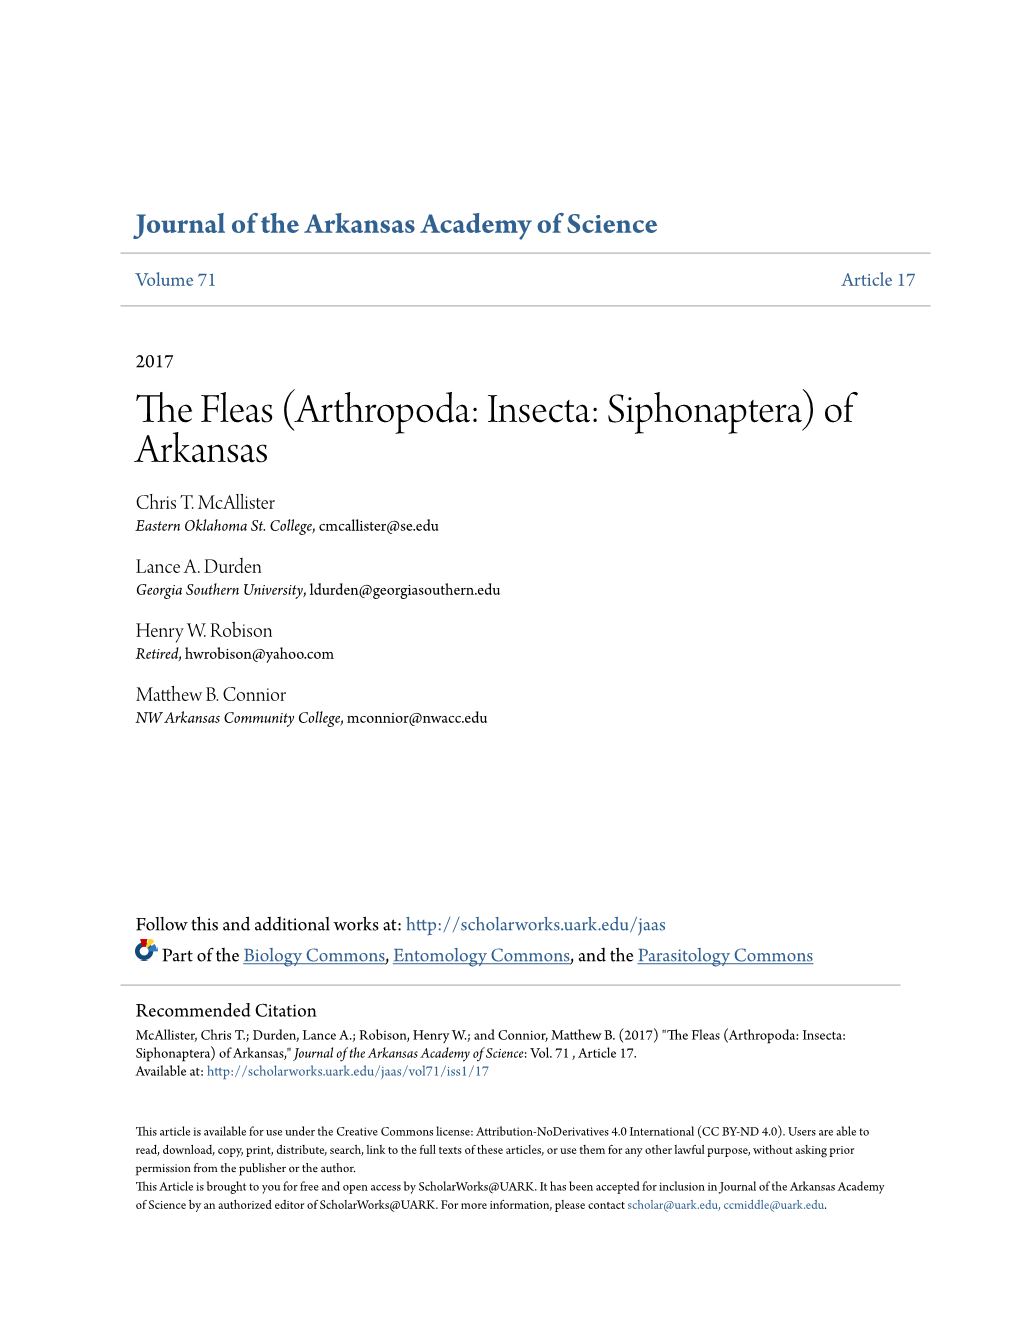 The Fleas (Arthropoda: Insecta: Siphonaptera) of Arkansas," Journal of the Arkansas Academy of Science: Vol